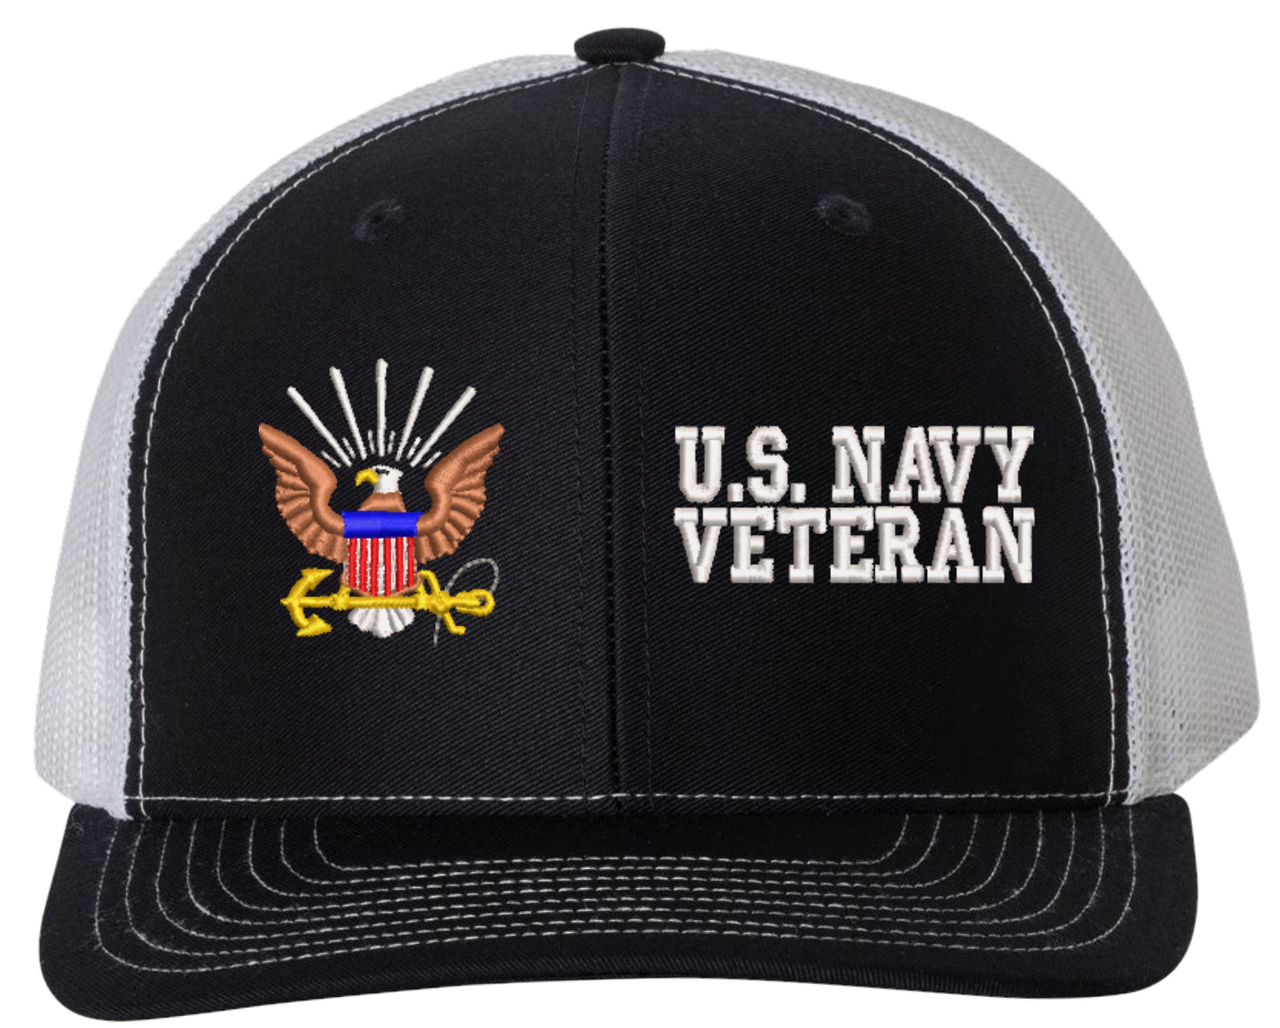 U.S. Navy Veteran Mesh Back Cap - Submarine Gear